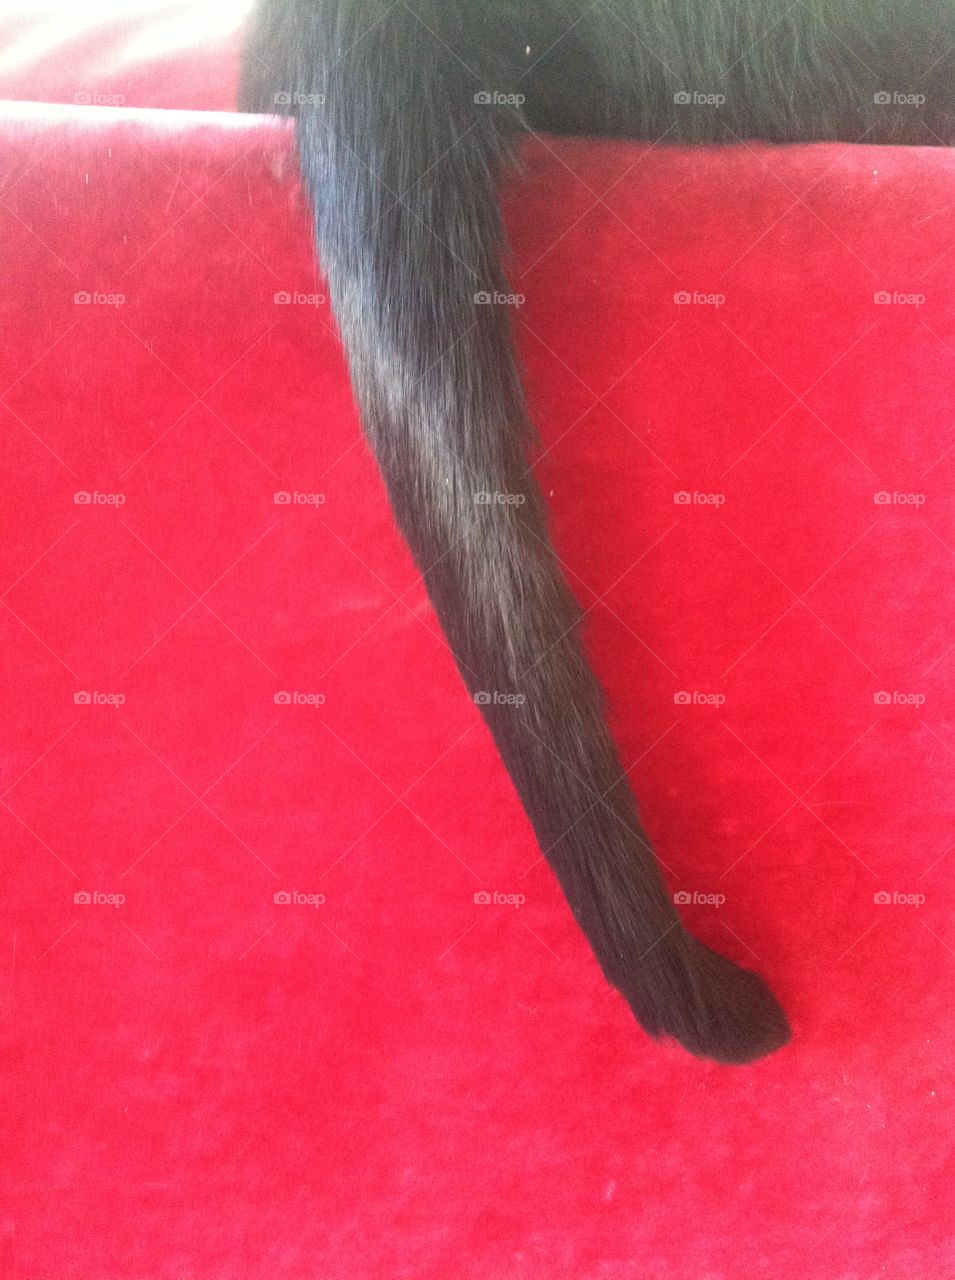 Black cat tail 